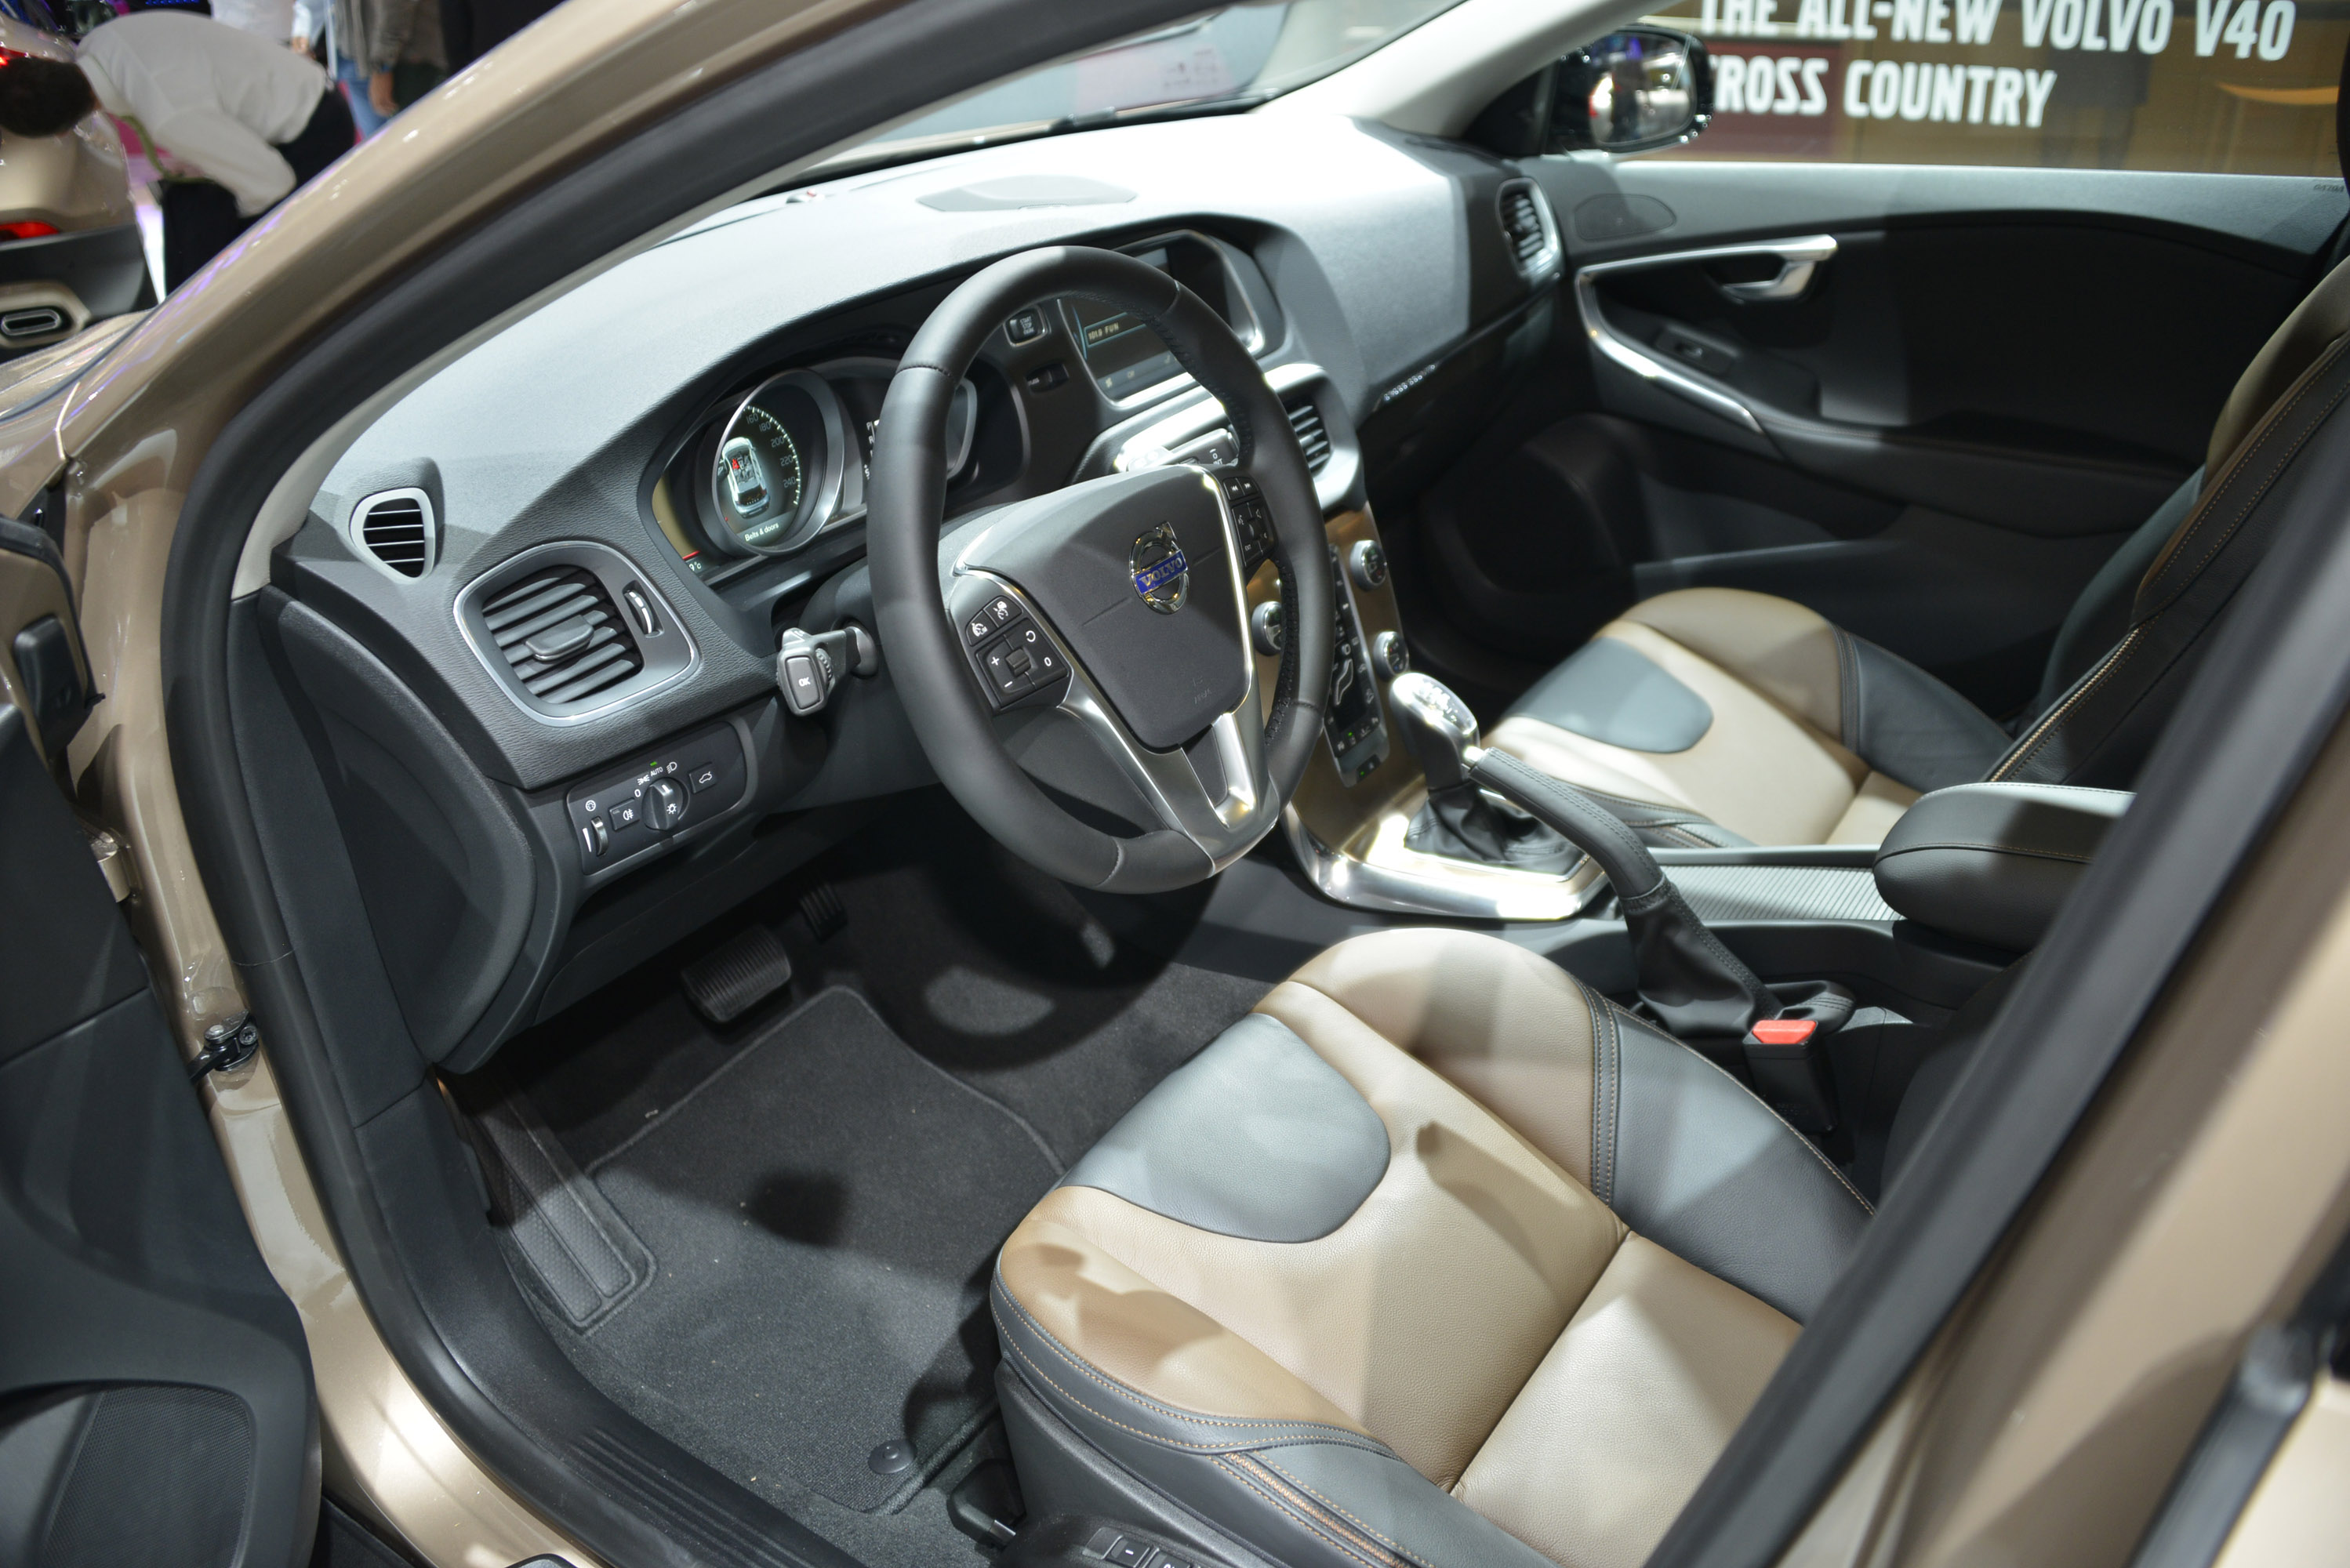 Volvo V40 Cross Country Interior